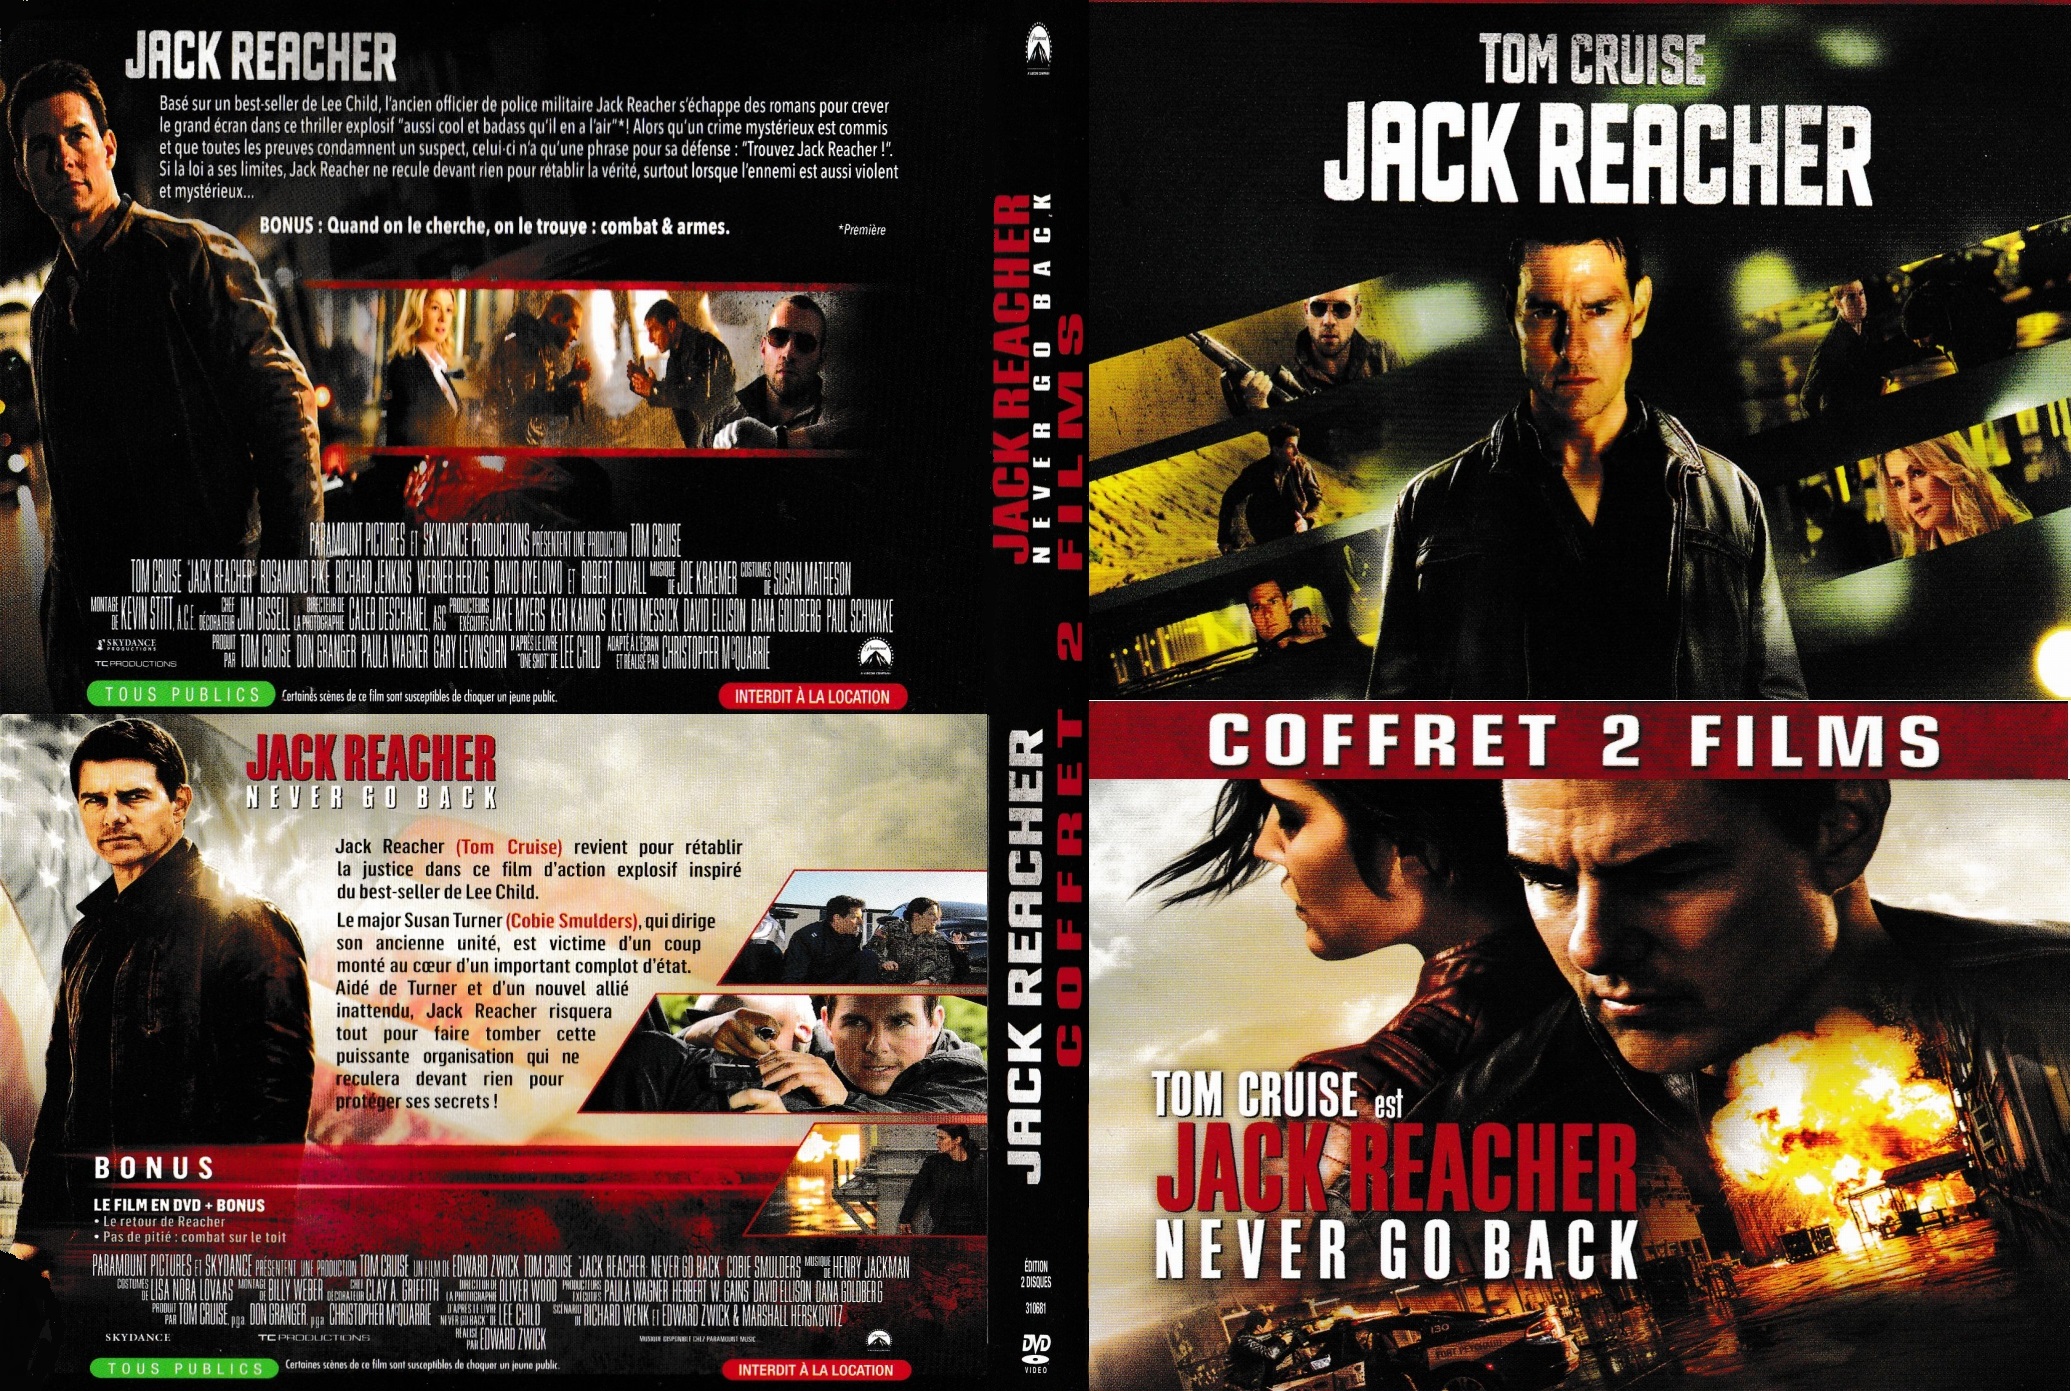 Jaquette DVD Jack Reacher integrale custom